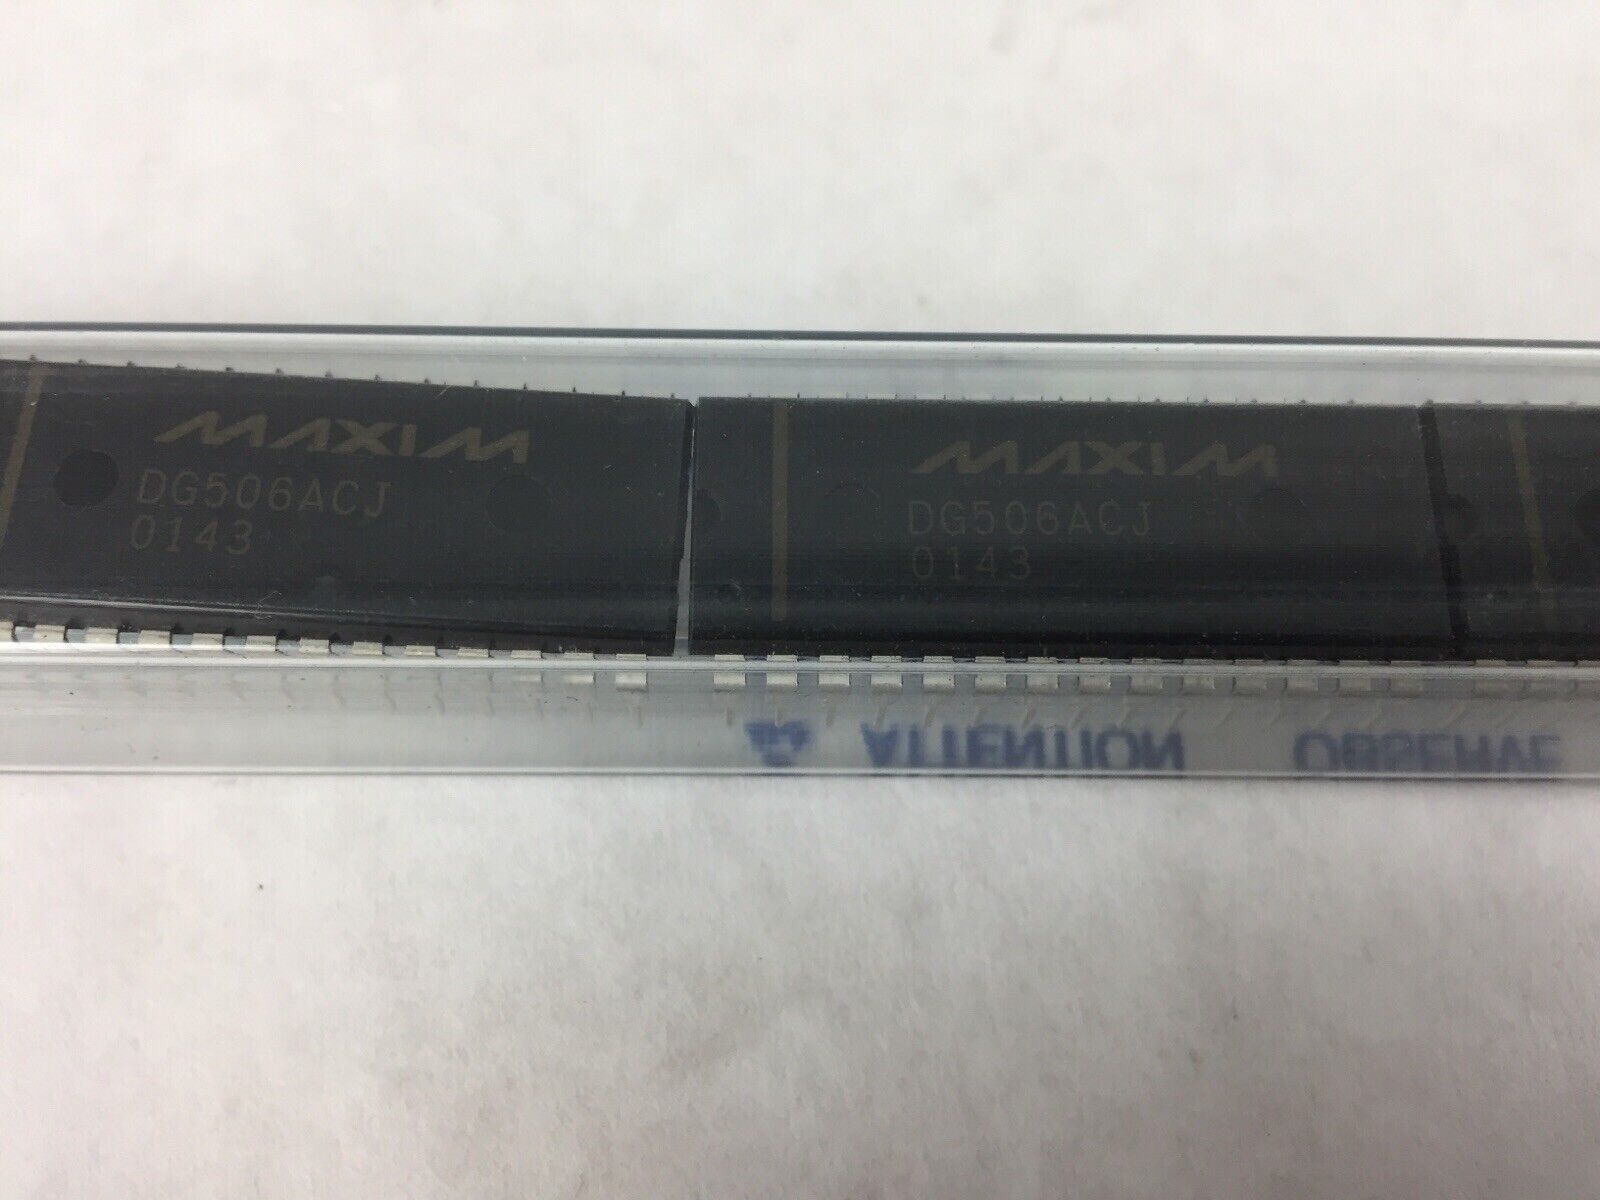 MAXIM LCQ DG506ACJ 0143 - Micro Chip - Lot of 9